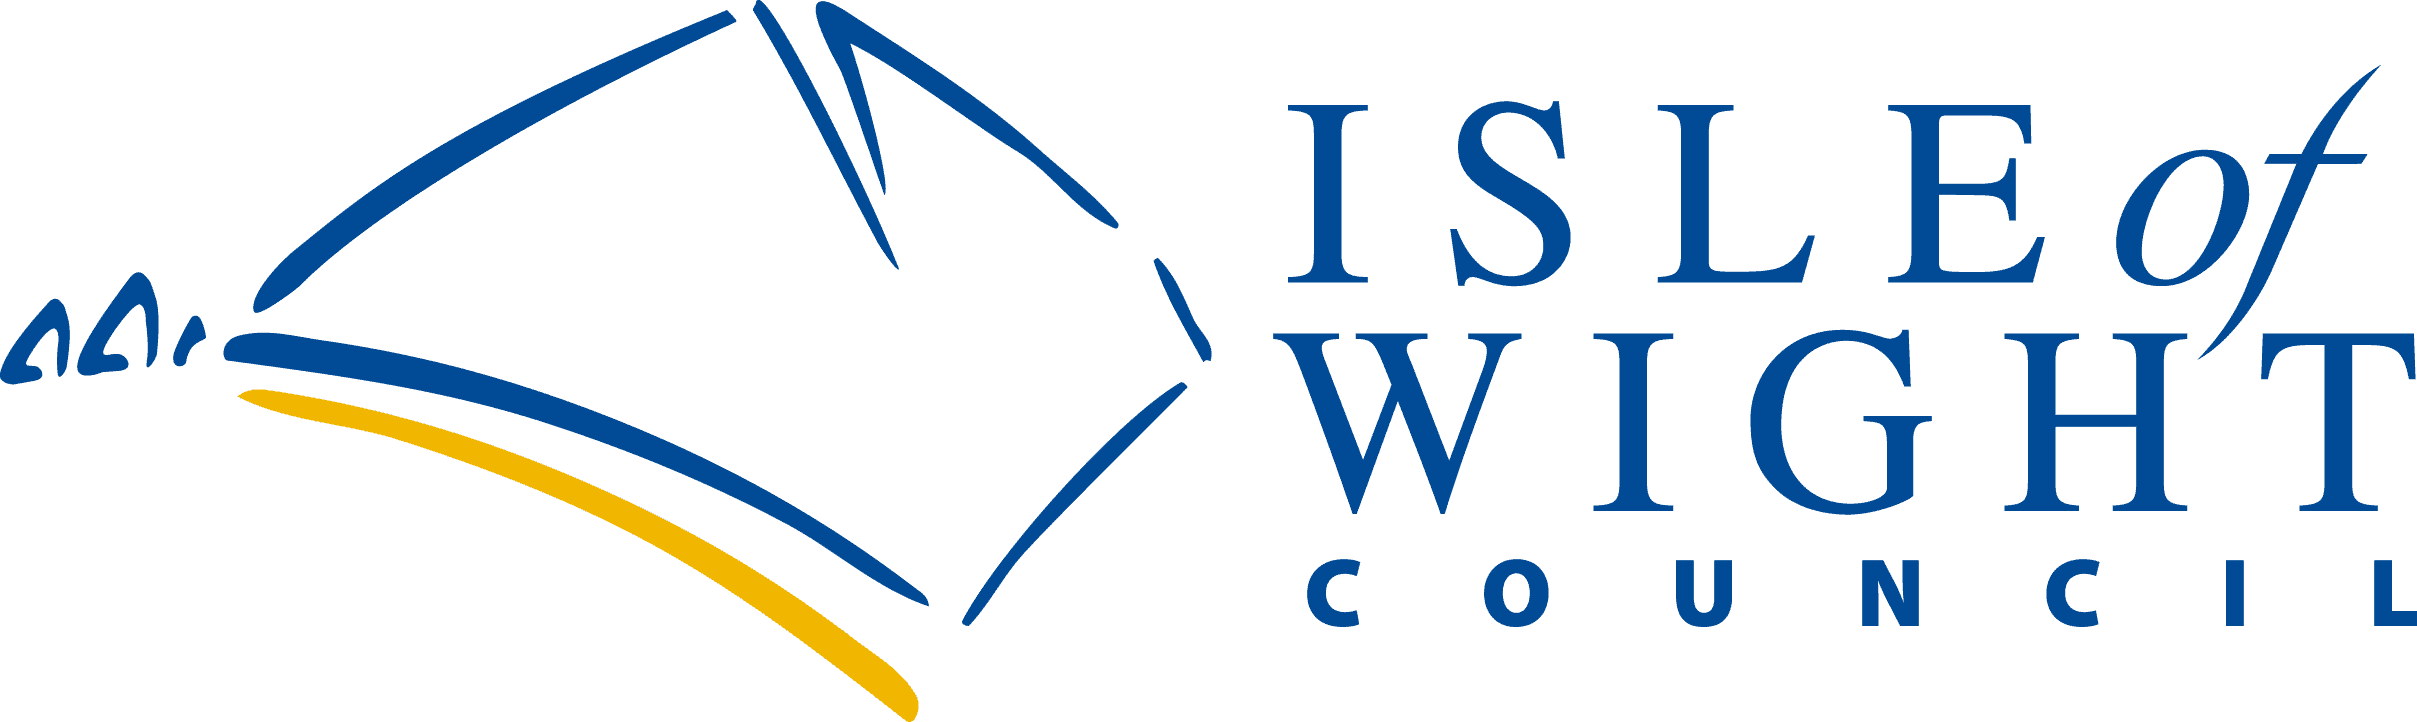 IWC-logo-landscape.png